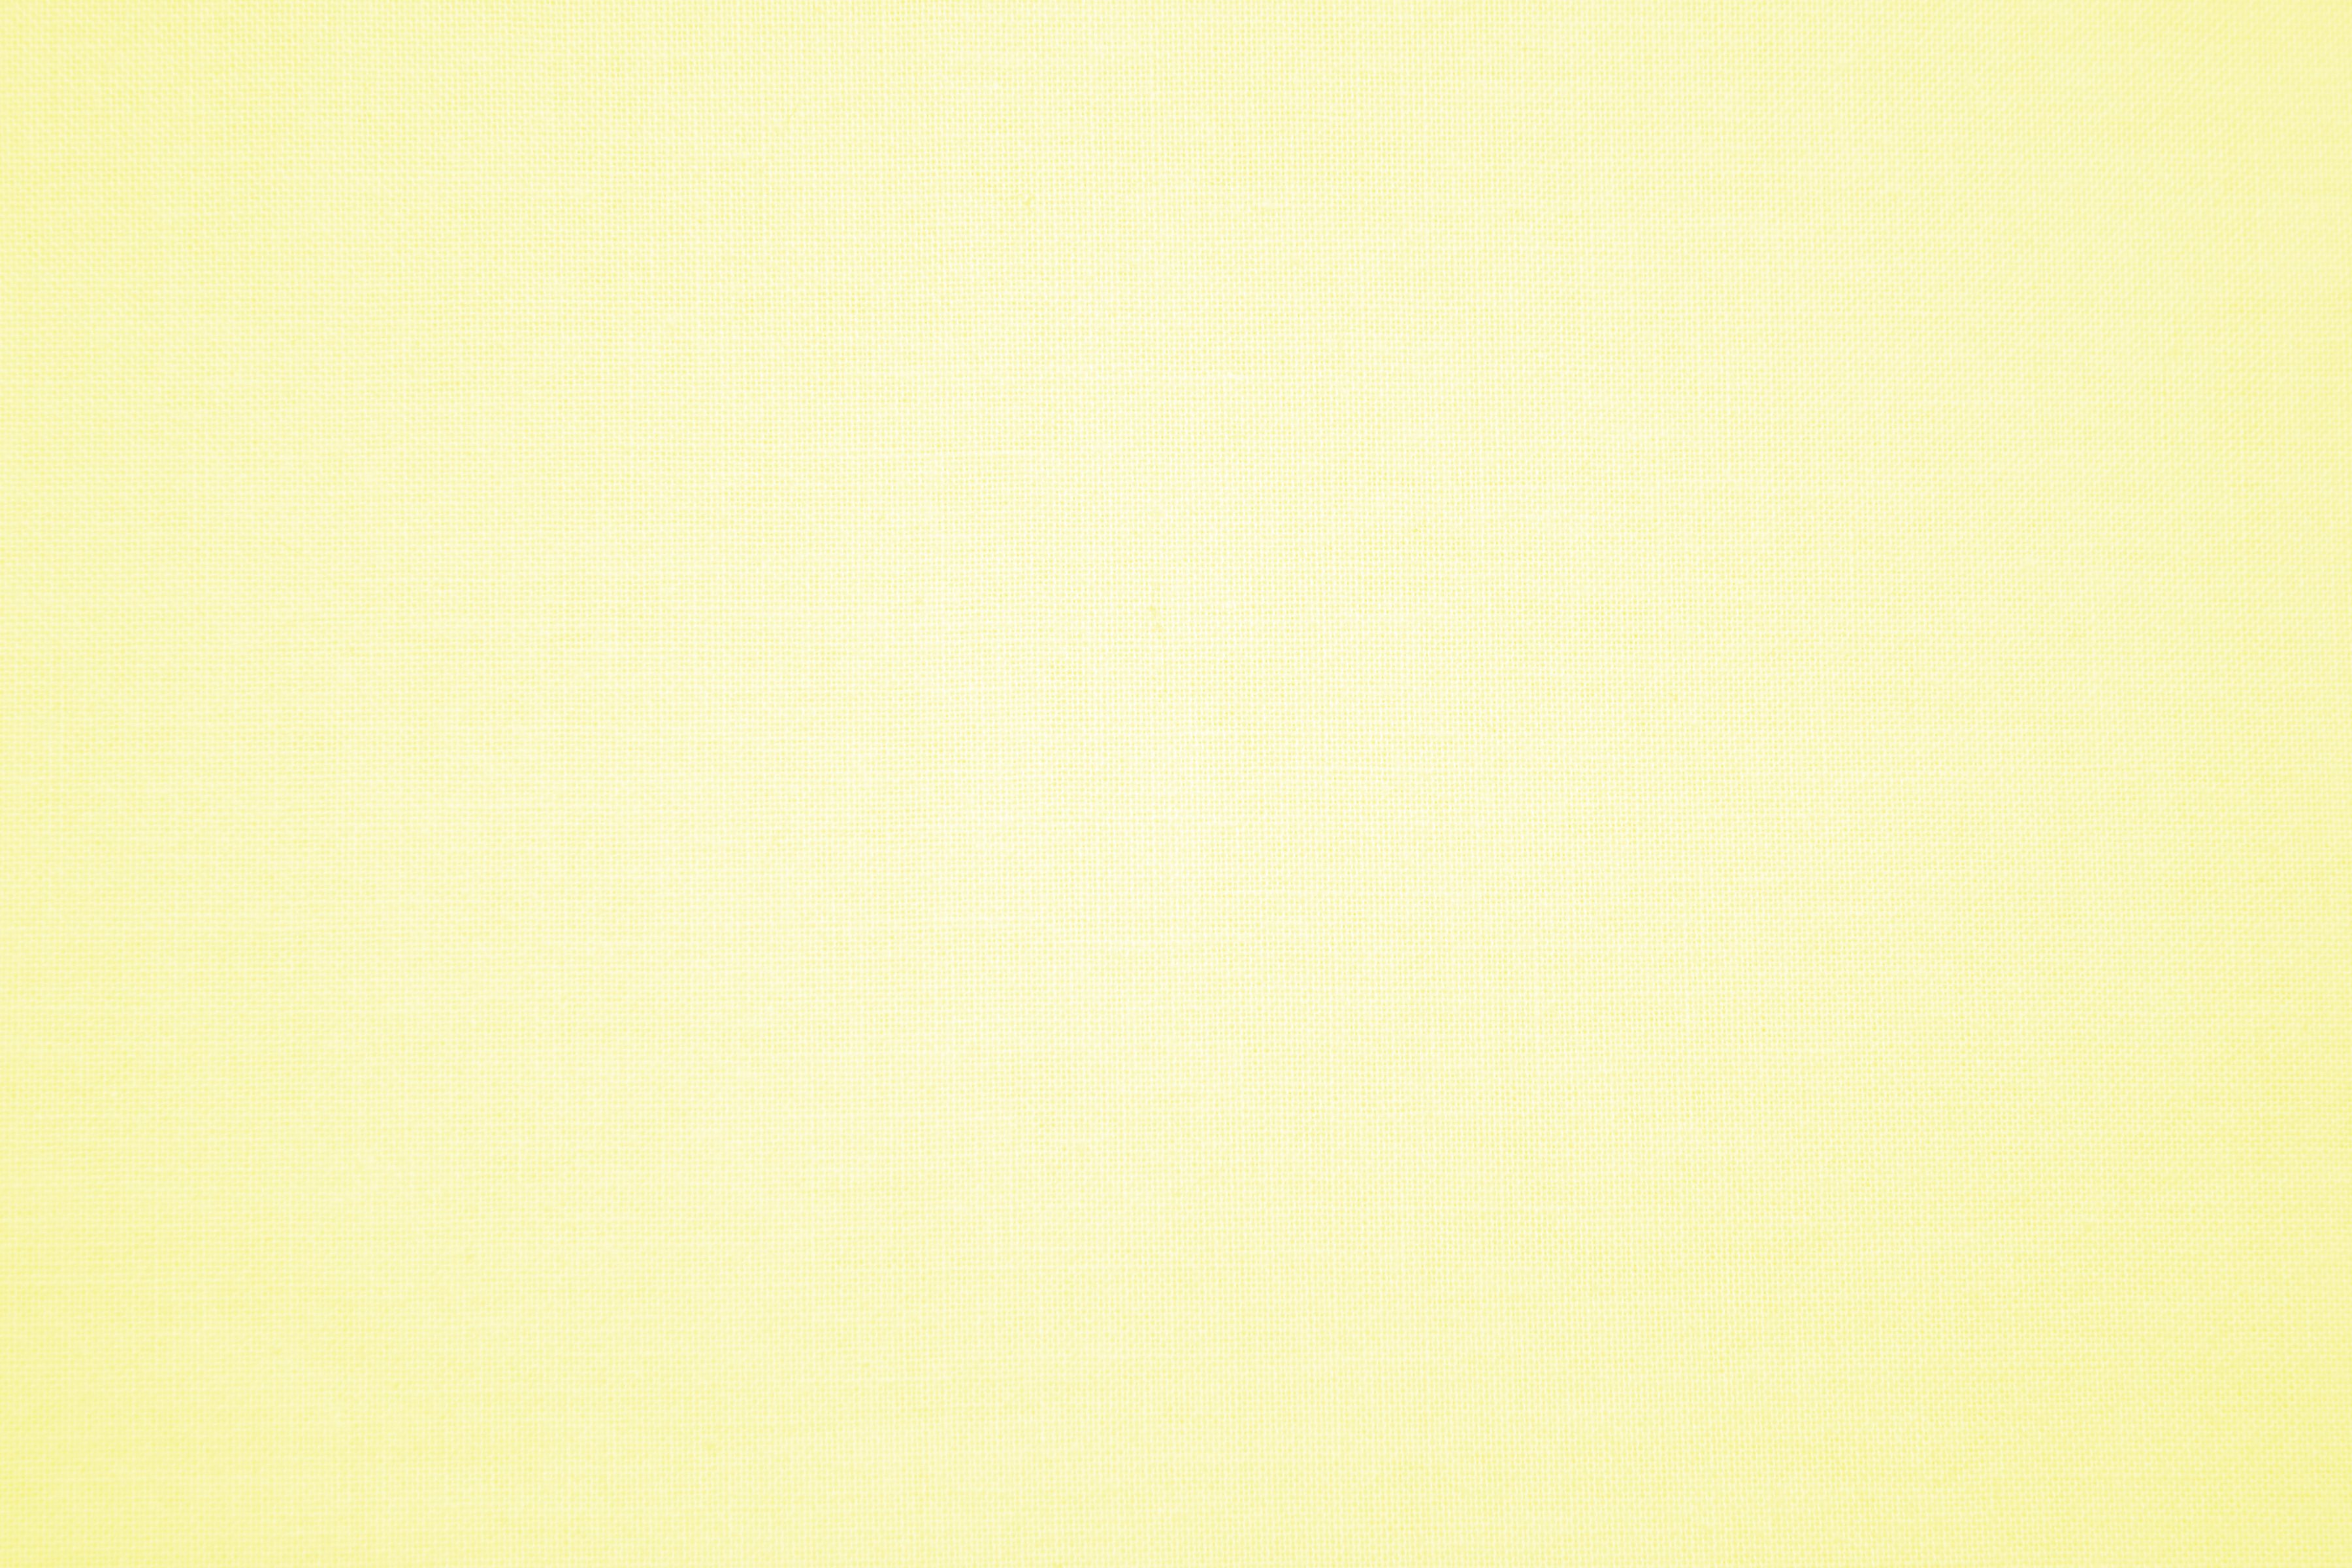 Pastel Yellow Canvas Fabric Texture Picture | Free Photograph | Photos  Public Domain